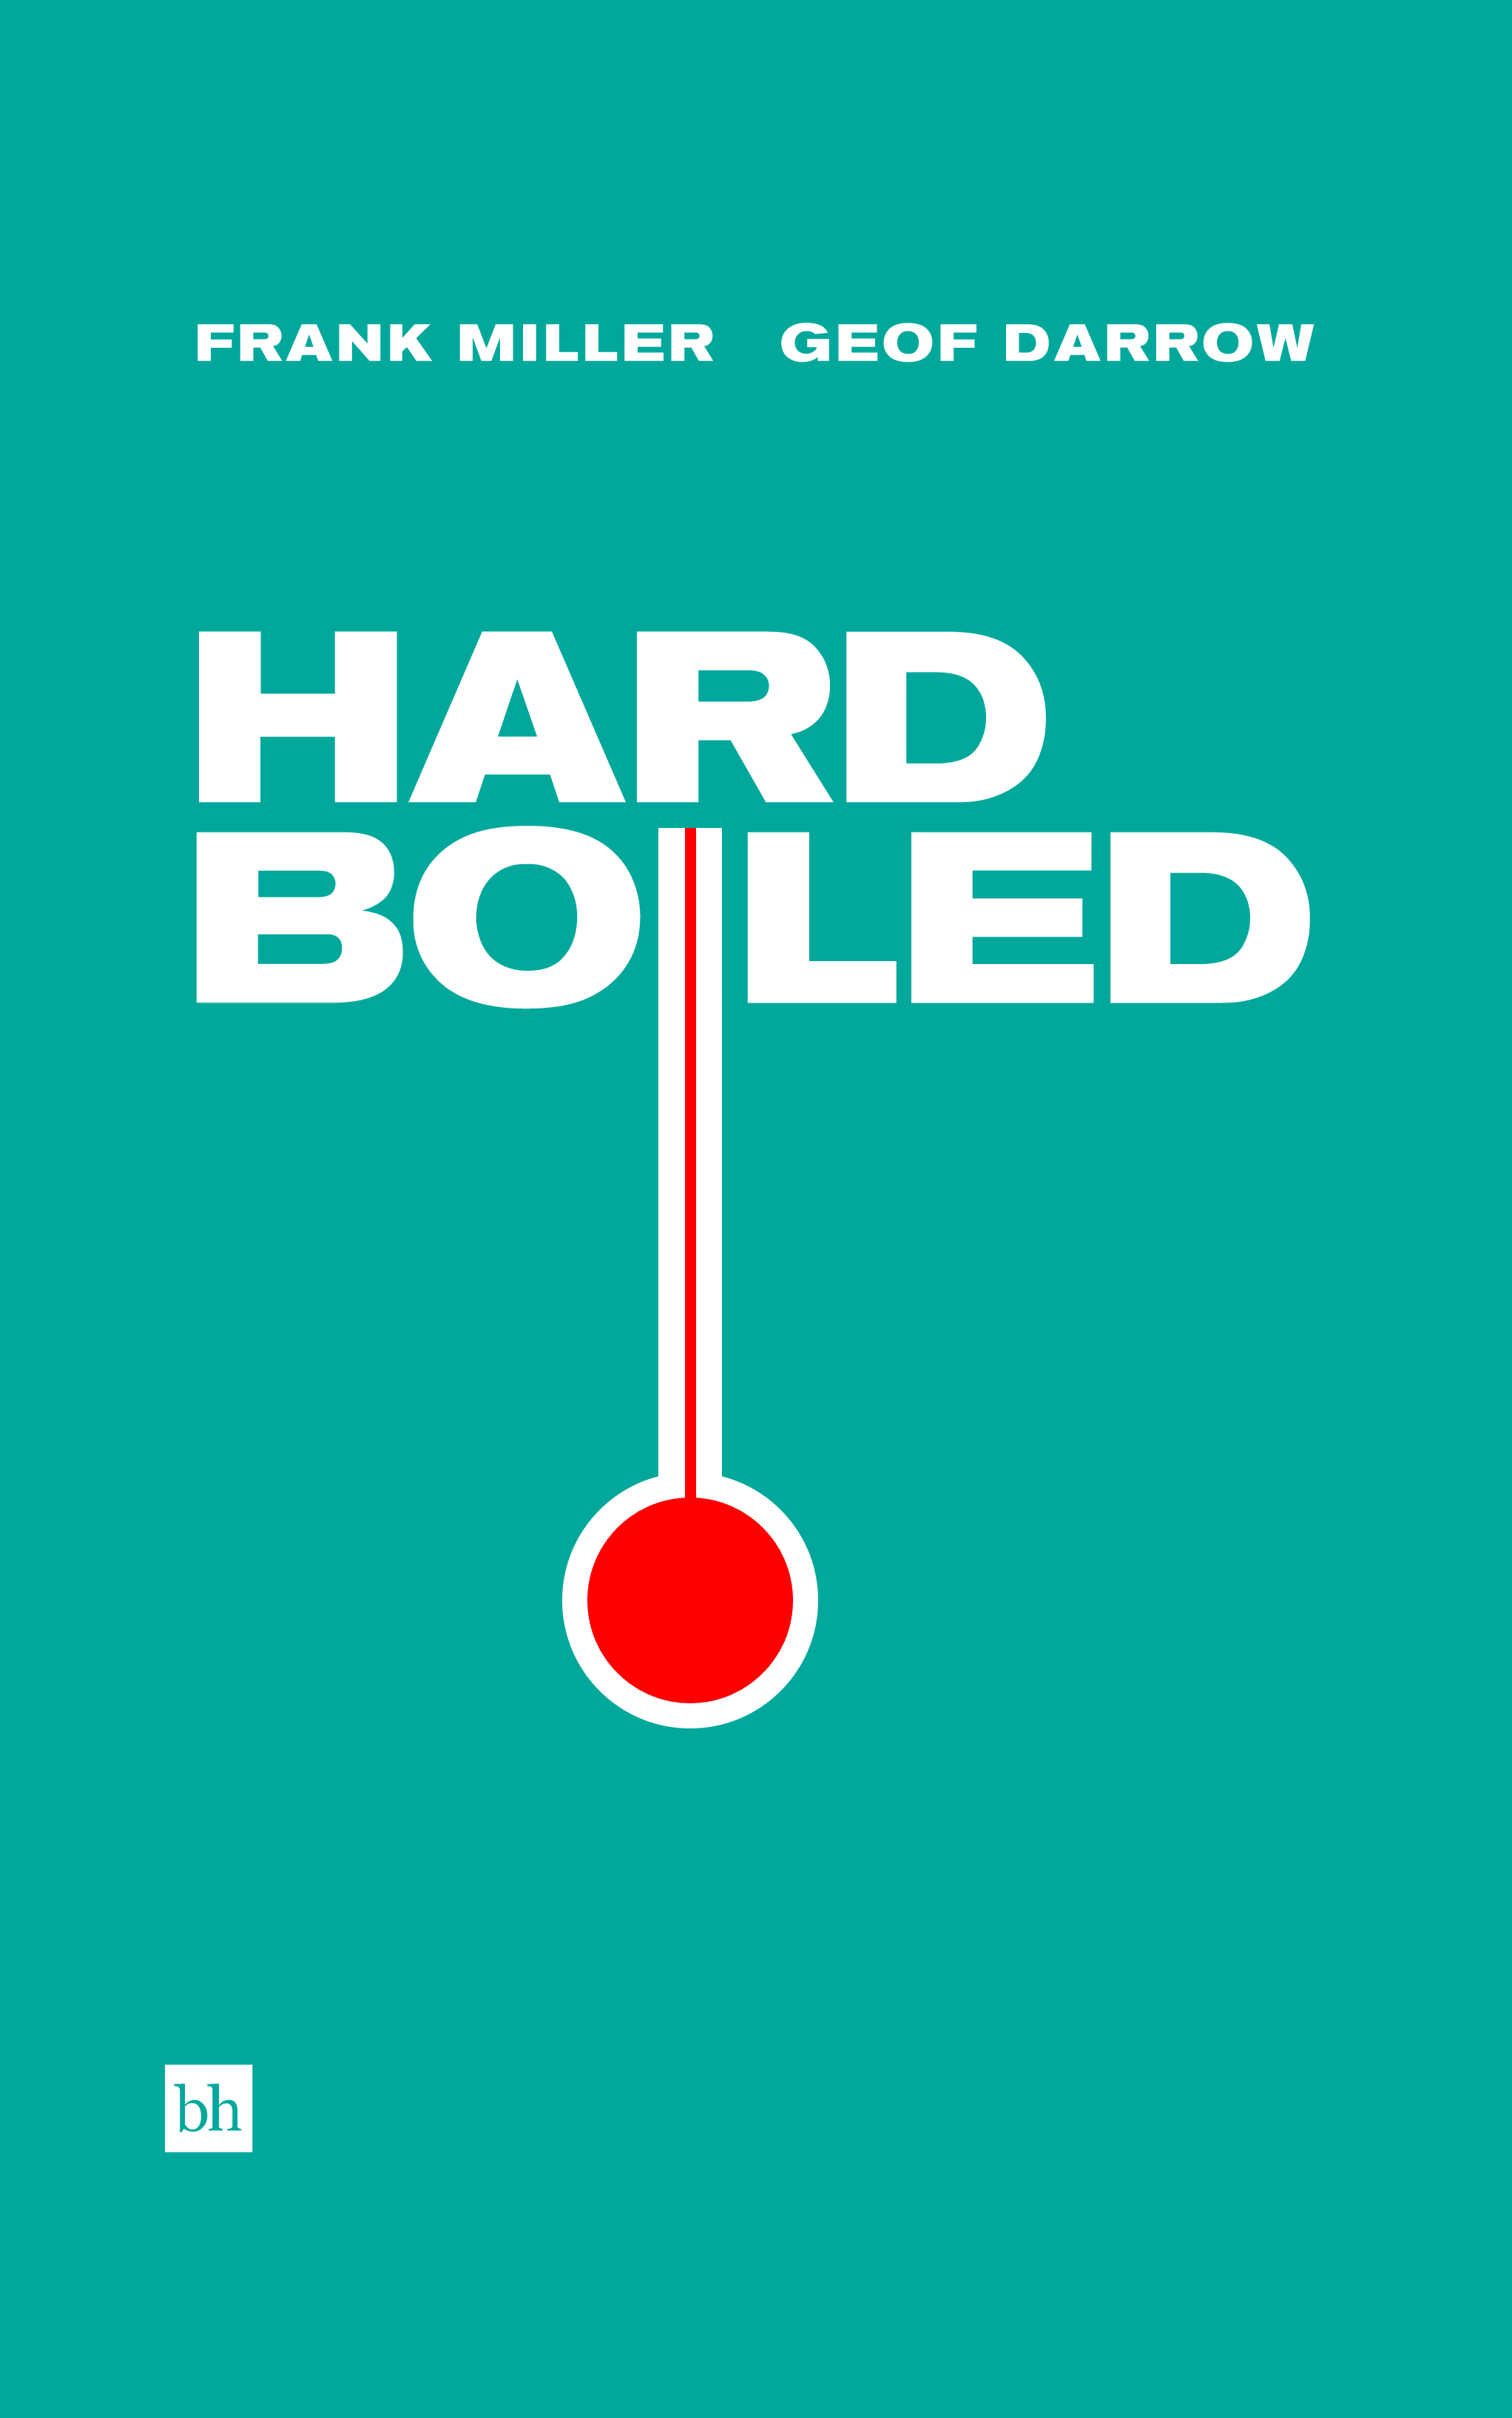 Hard Boiled by Frank Miller